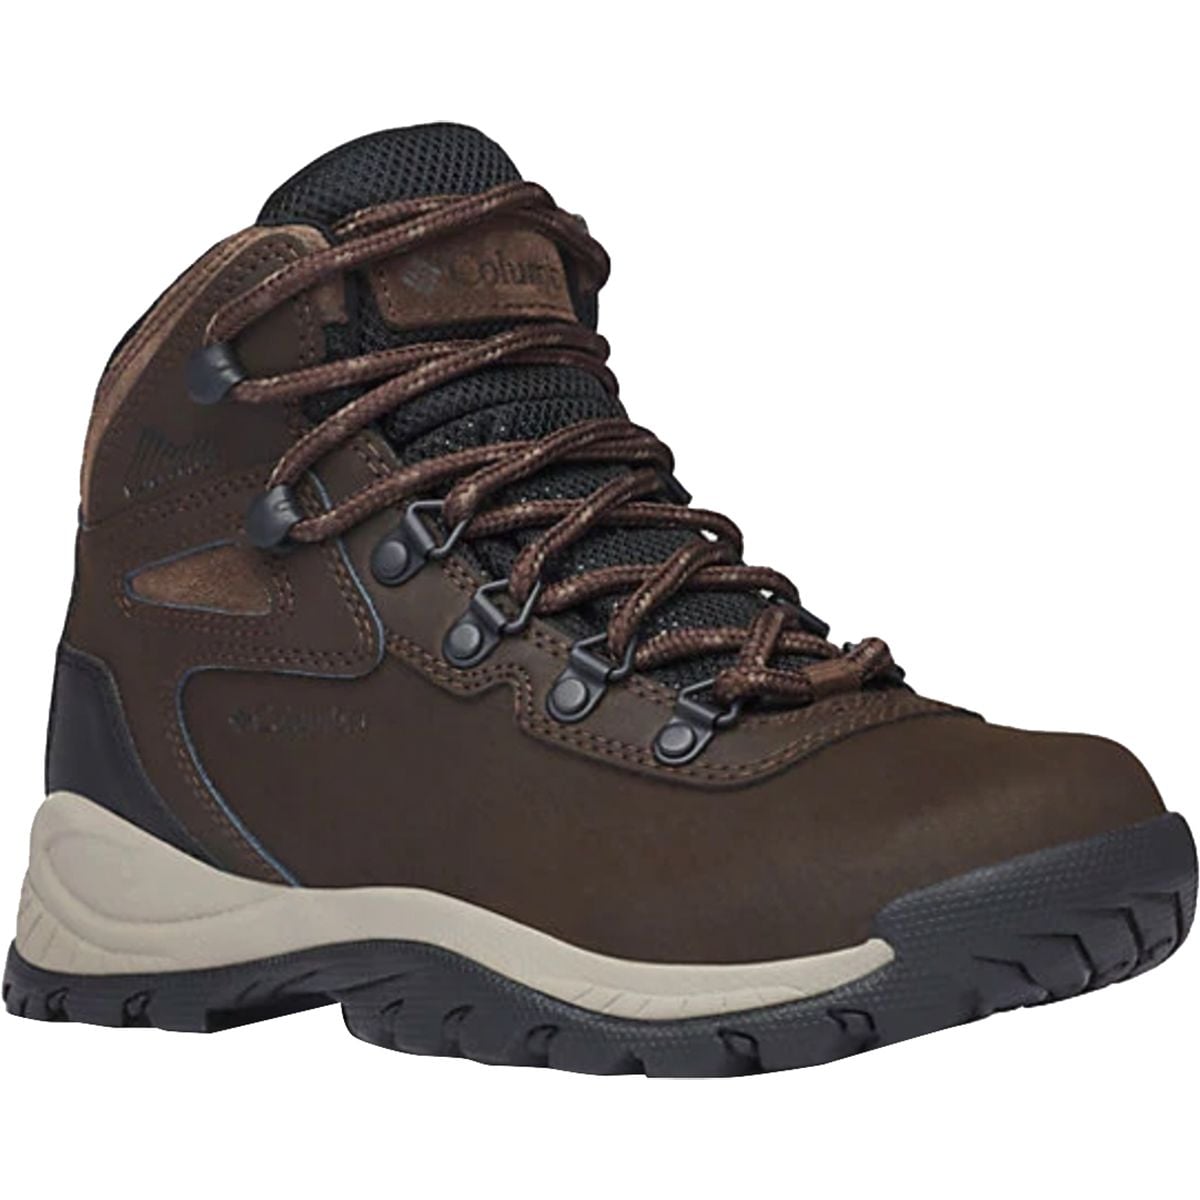 columbia newton ridge plus women's waterproof hiking boots